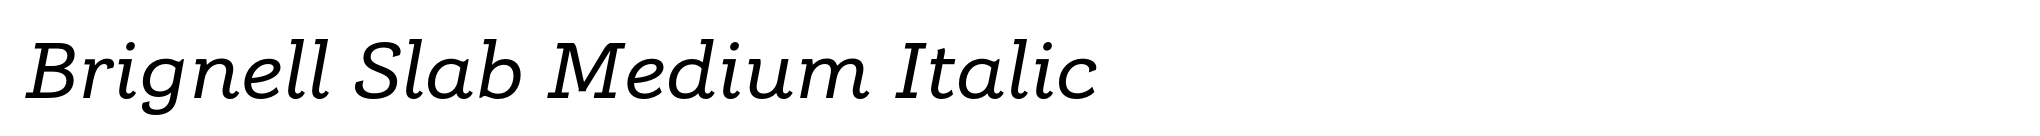 Brignell Slab Medium Italic image